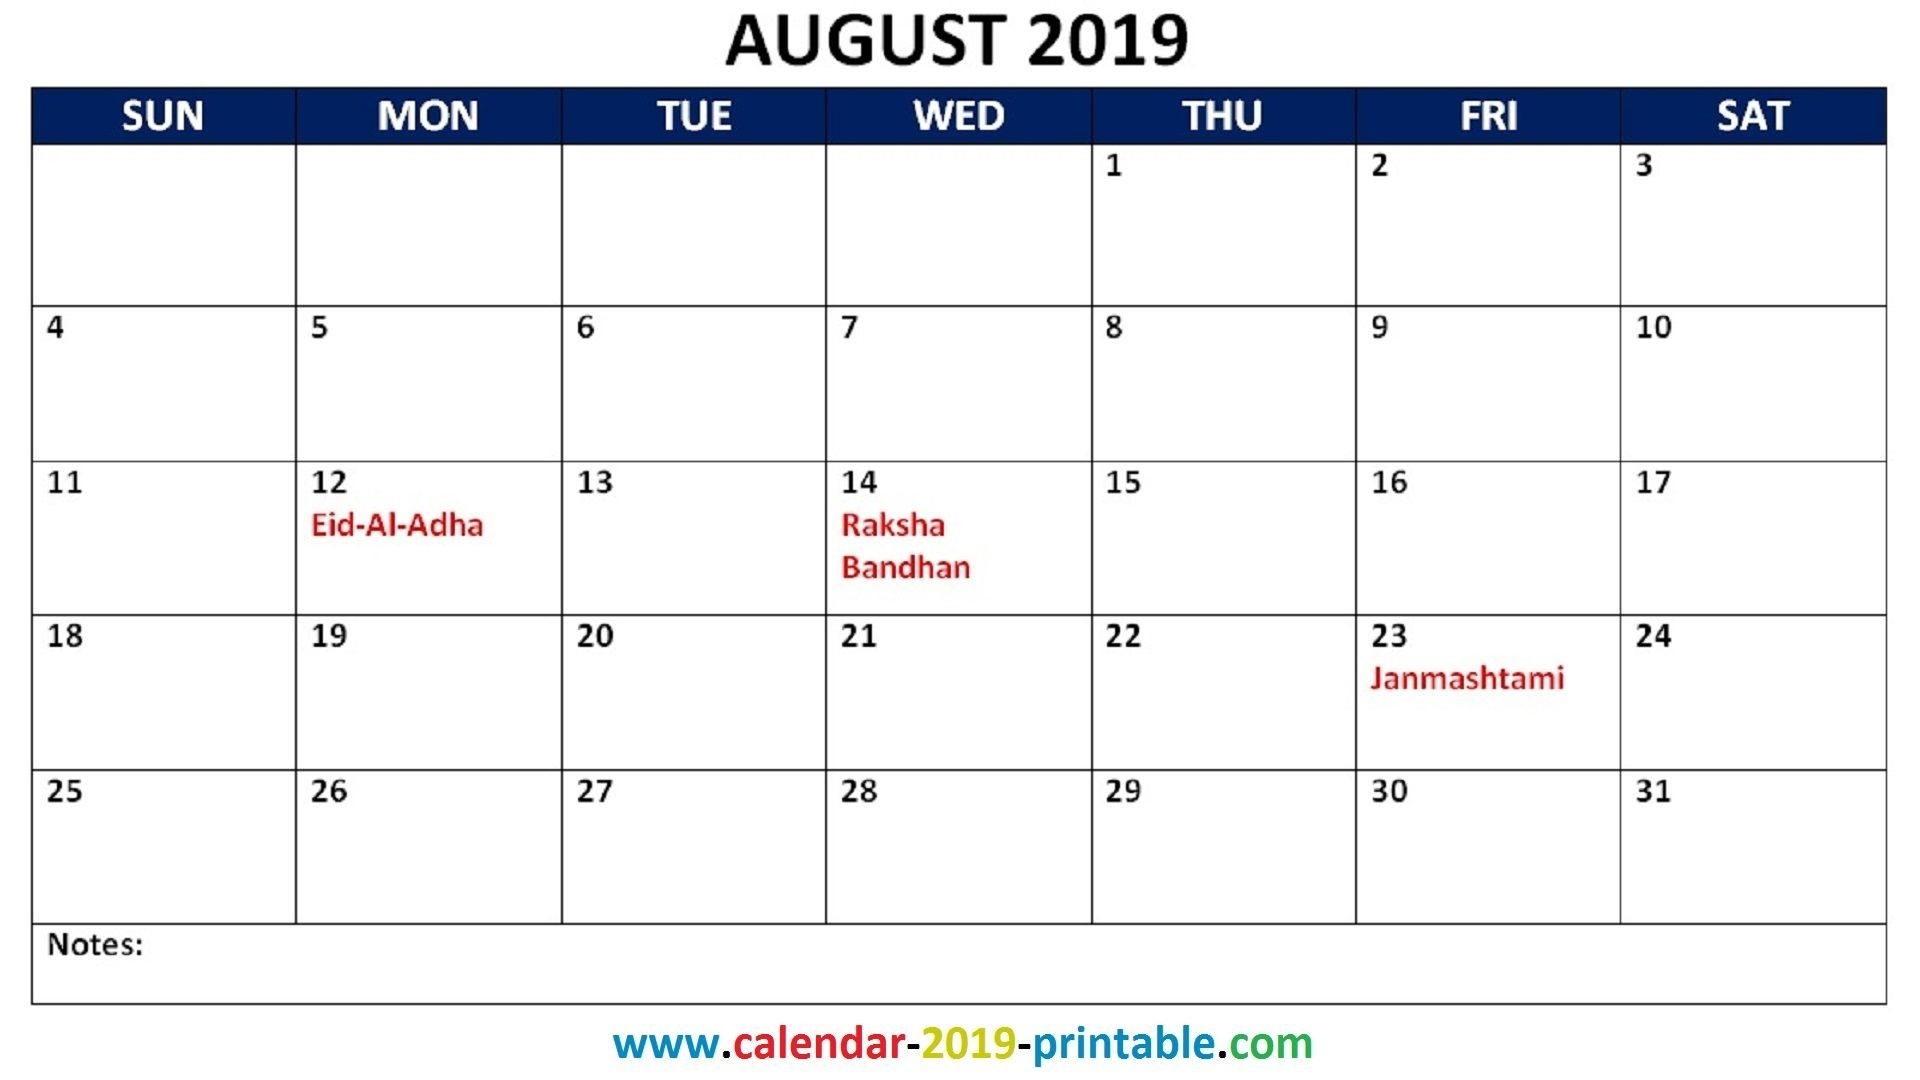 August 2019 Calendar With Holidays | 2019 Calendars | 2019 Calendar Calendar Holidays For August